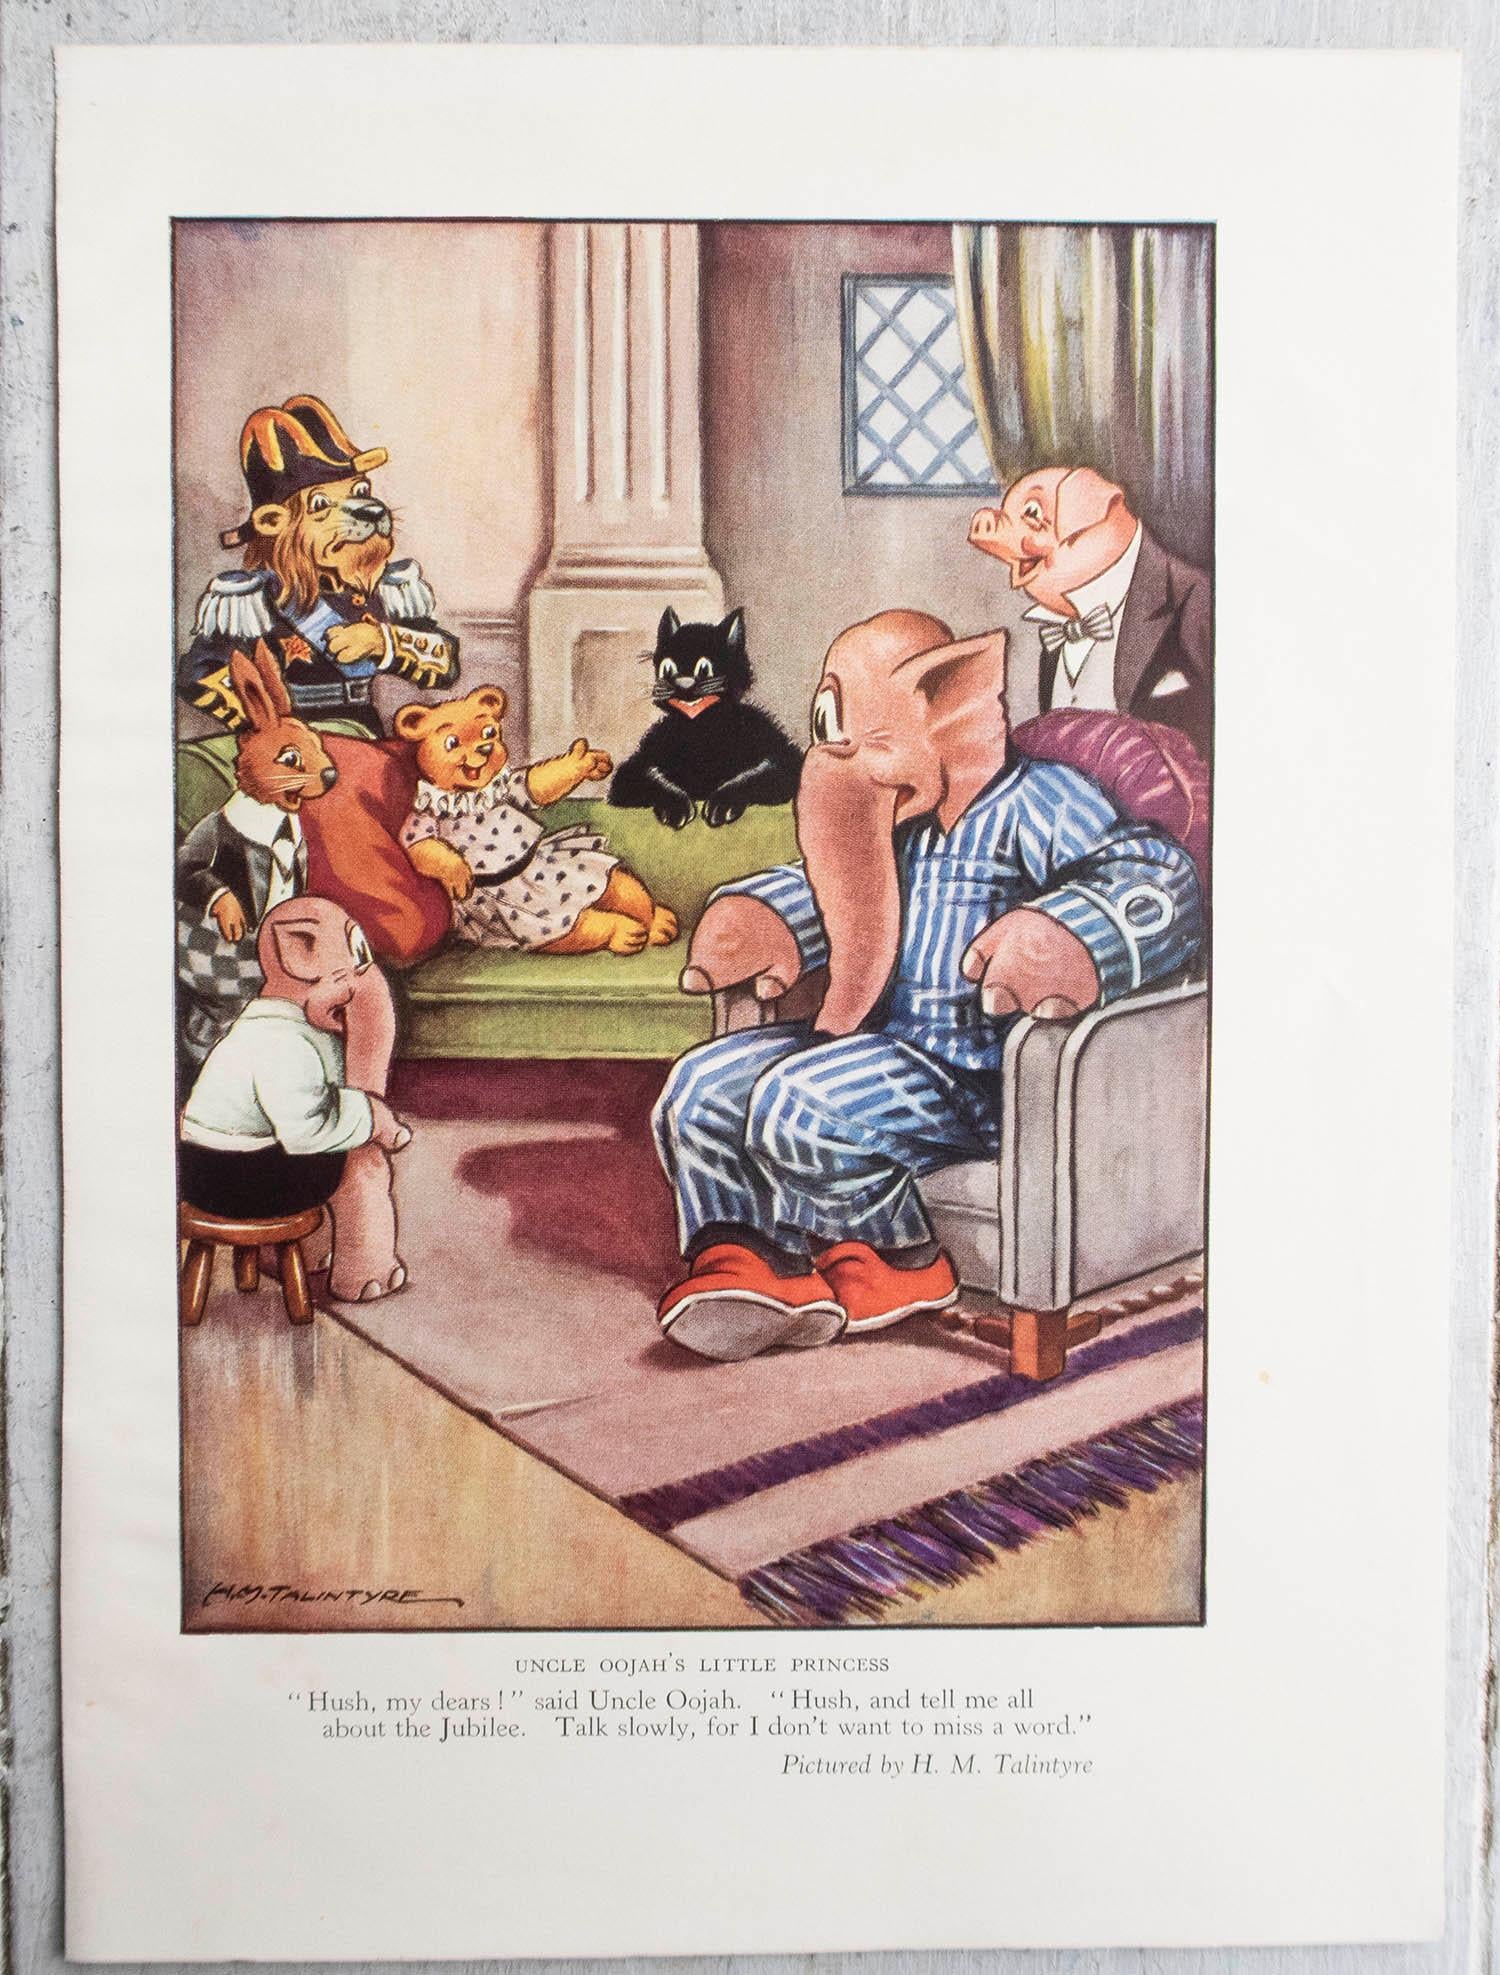 British Original Vintage Print of Uncle Oojah by H.M Talintyre. 1930's For Sale